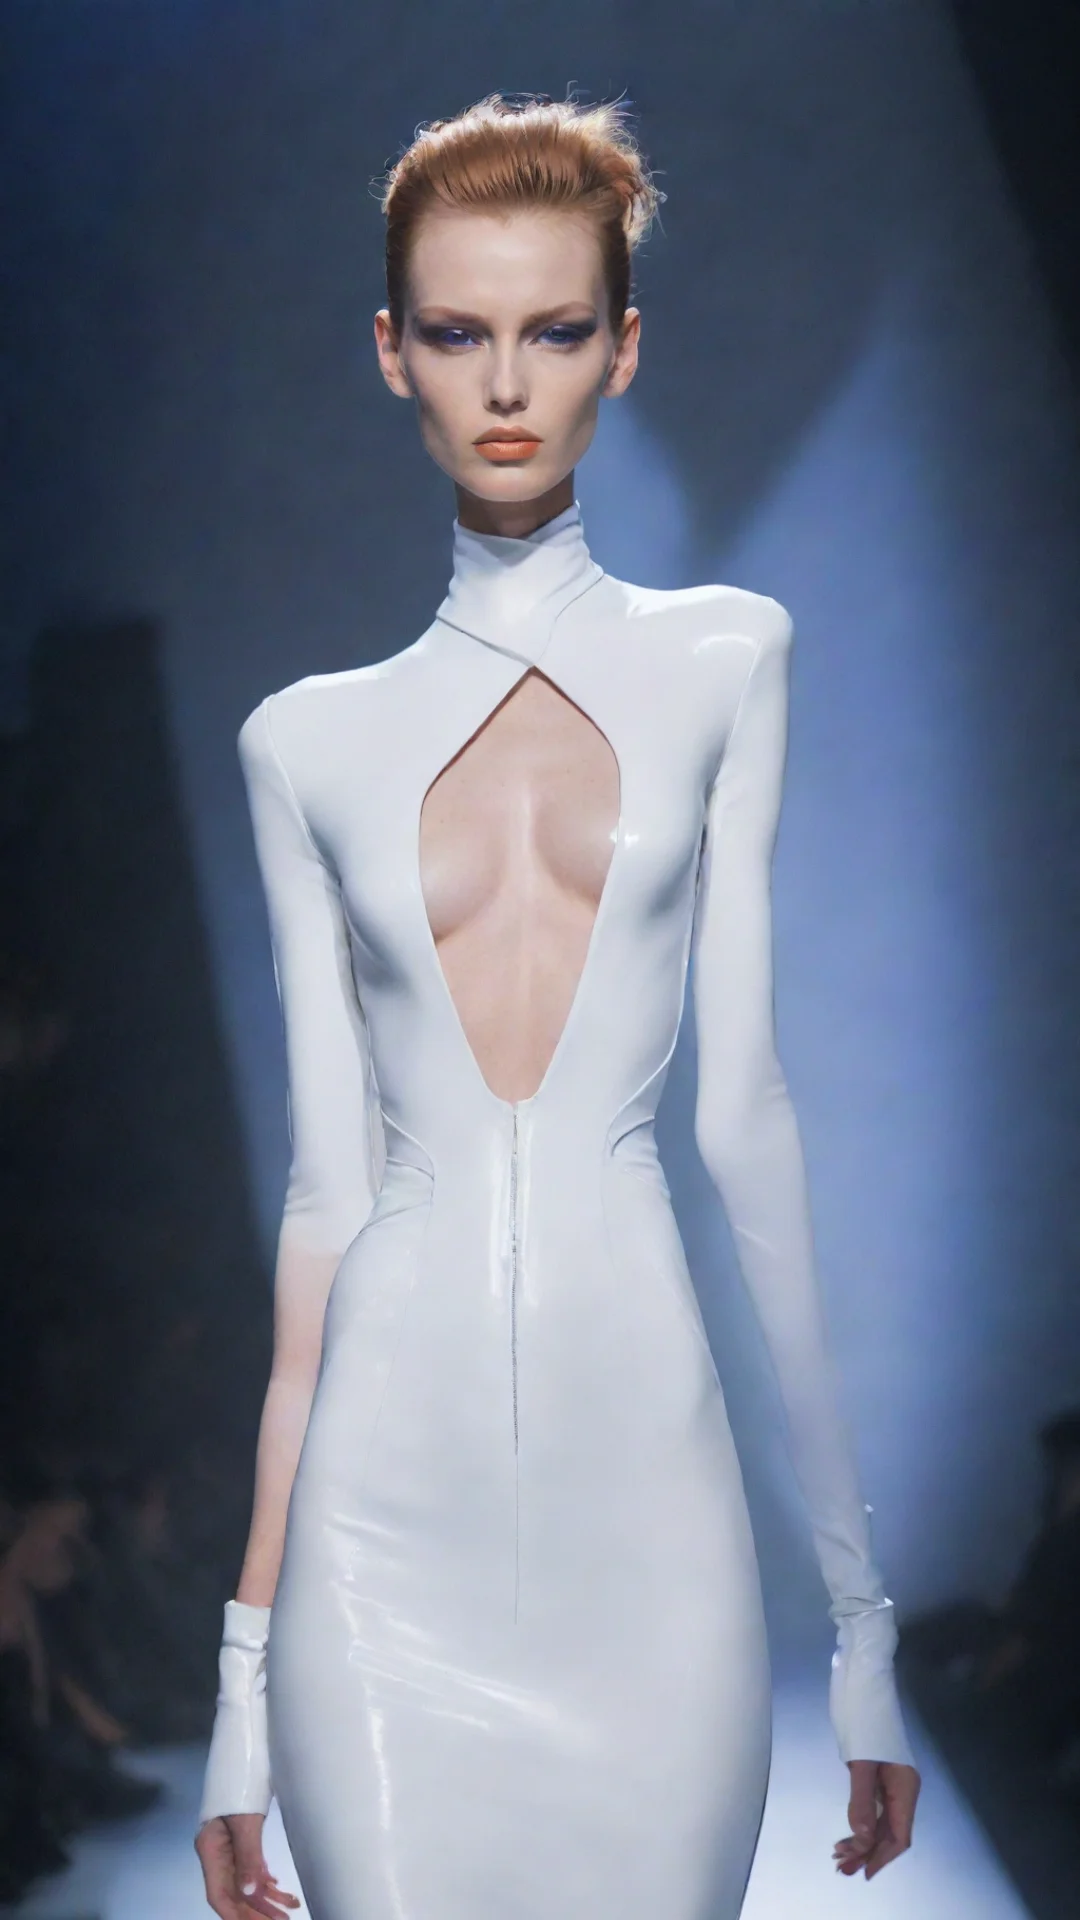 thierry mugler fashion style futuristic tall skinny model tall